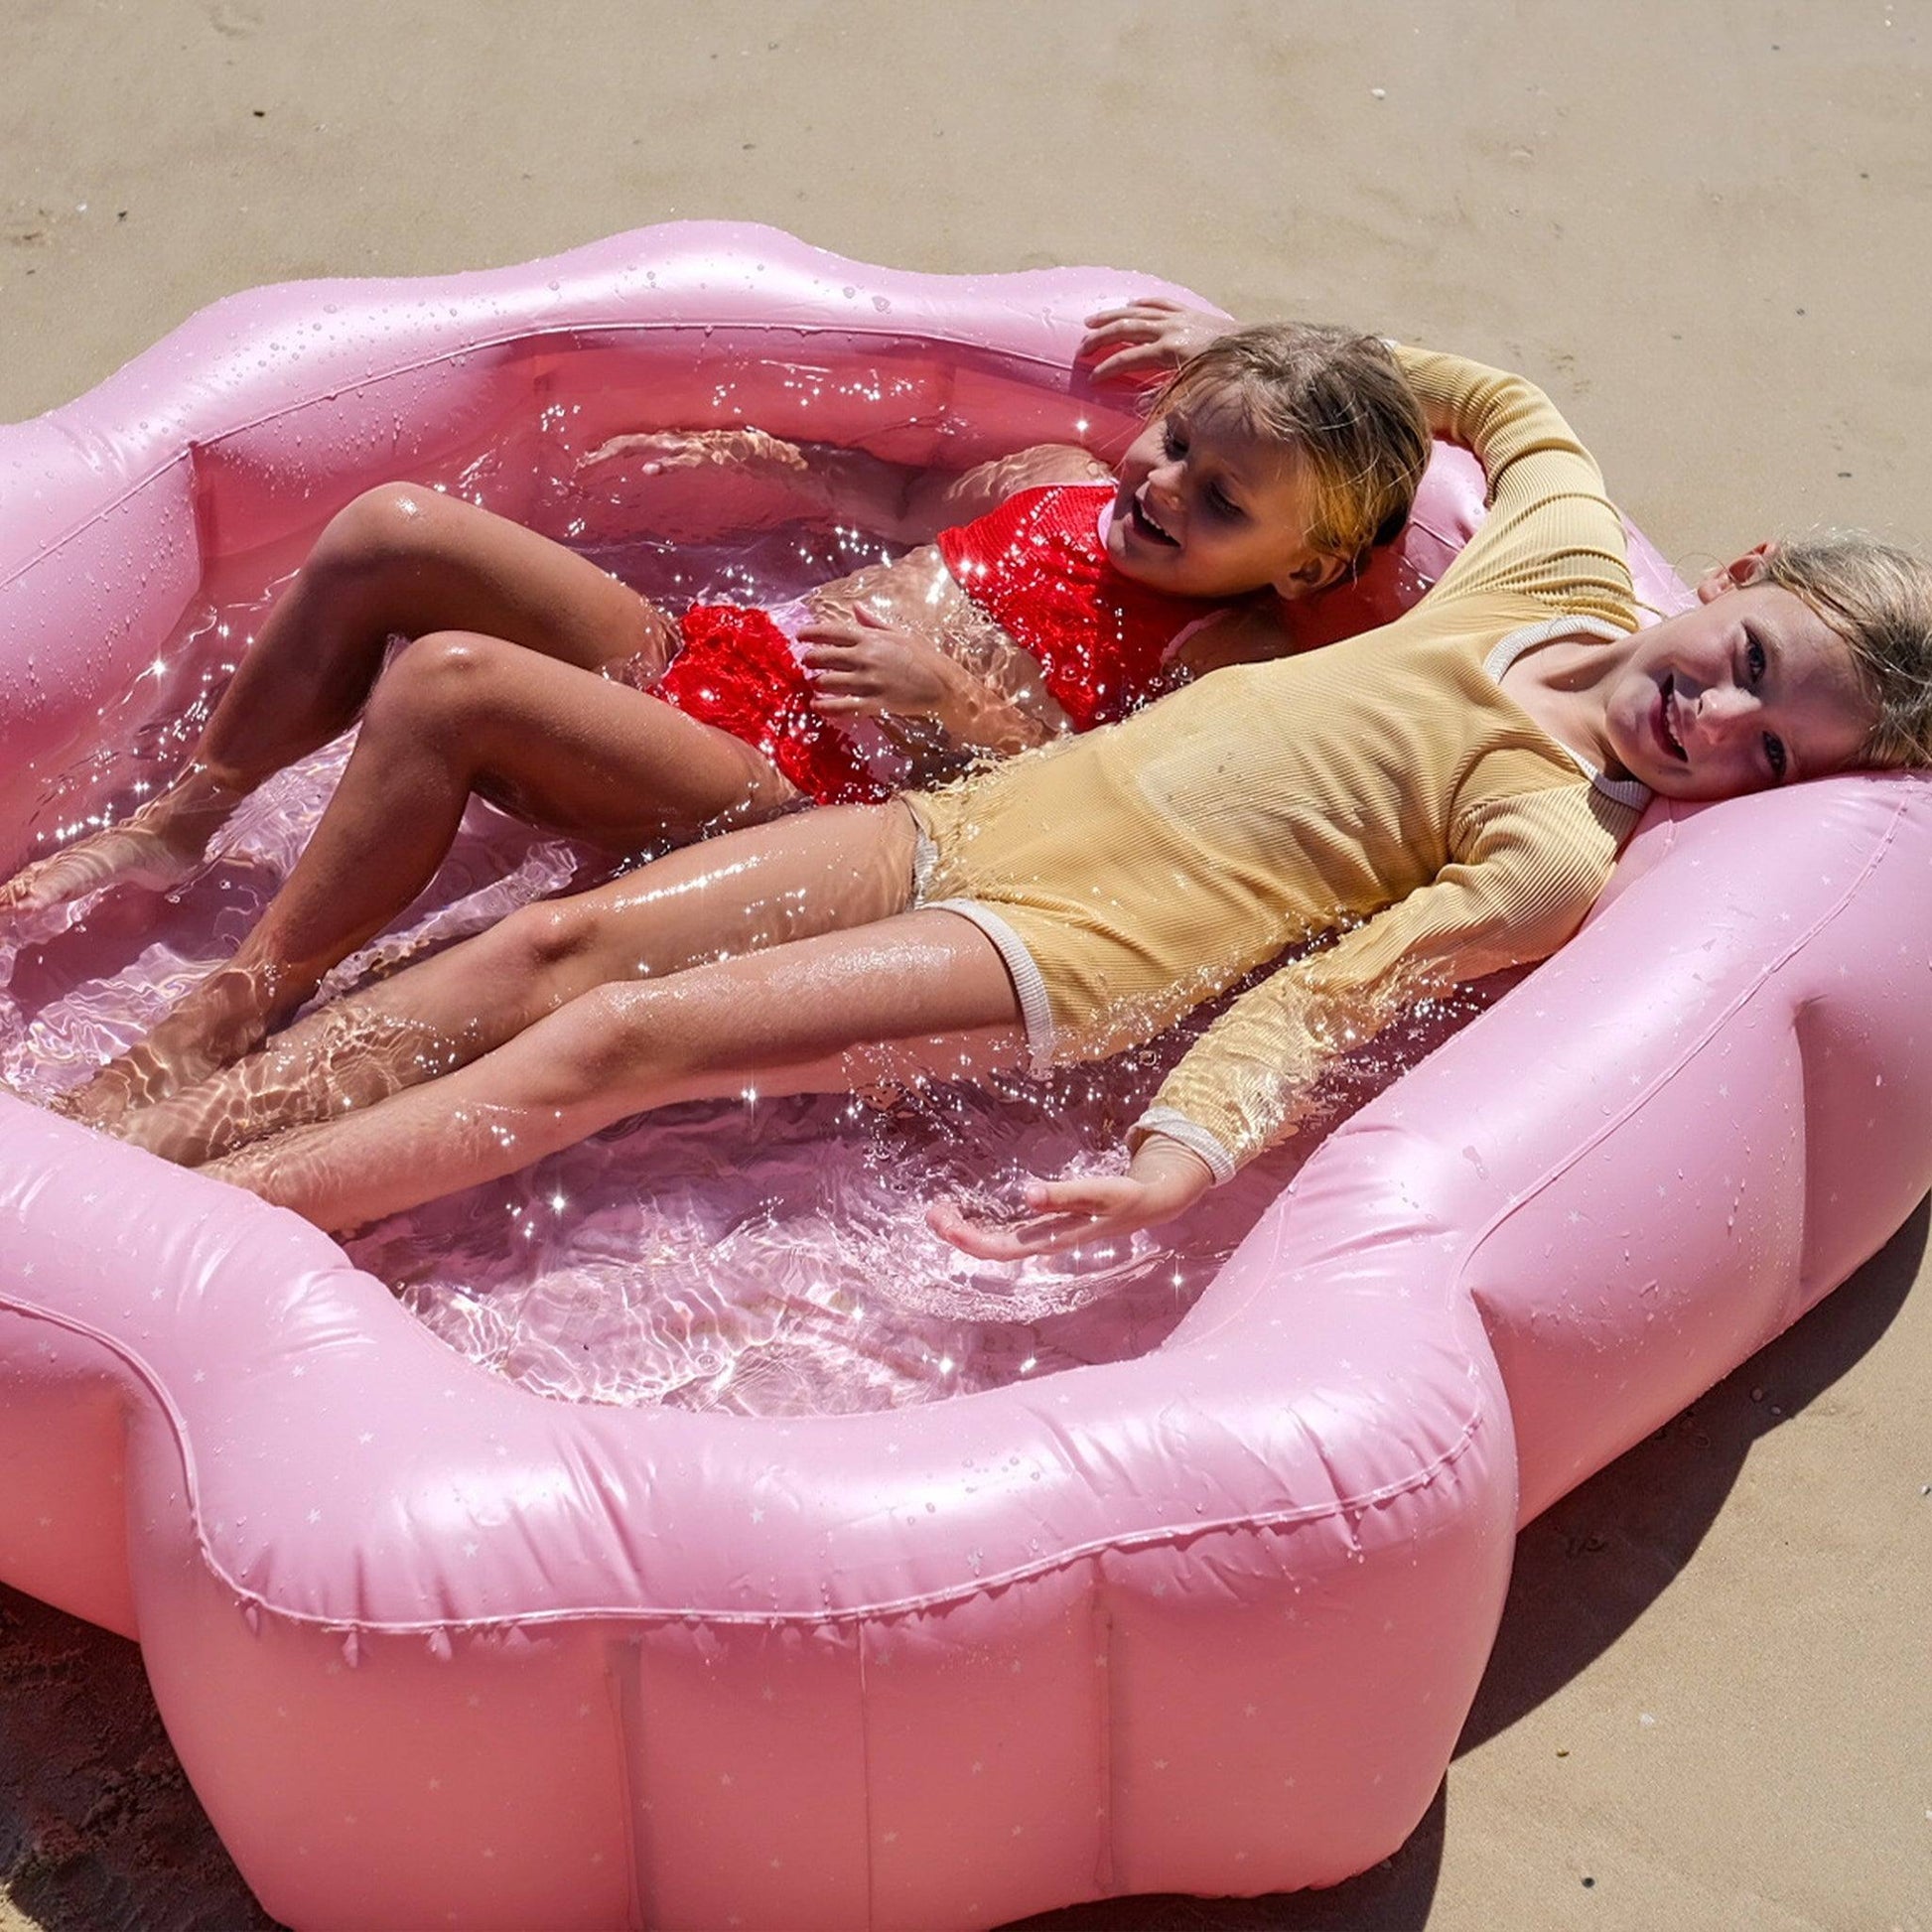 sunnylife Ocean Treasure Rose Inflatable Backyard Pool - partyalacarte.co.in